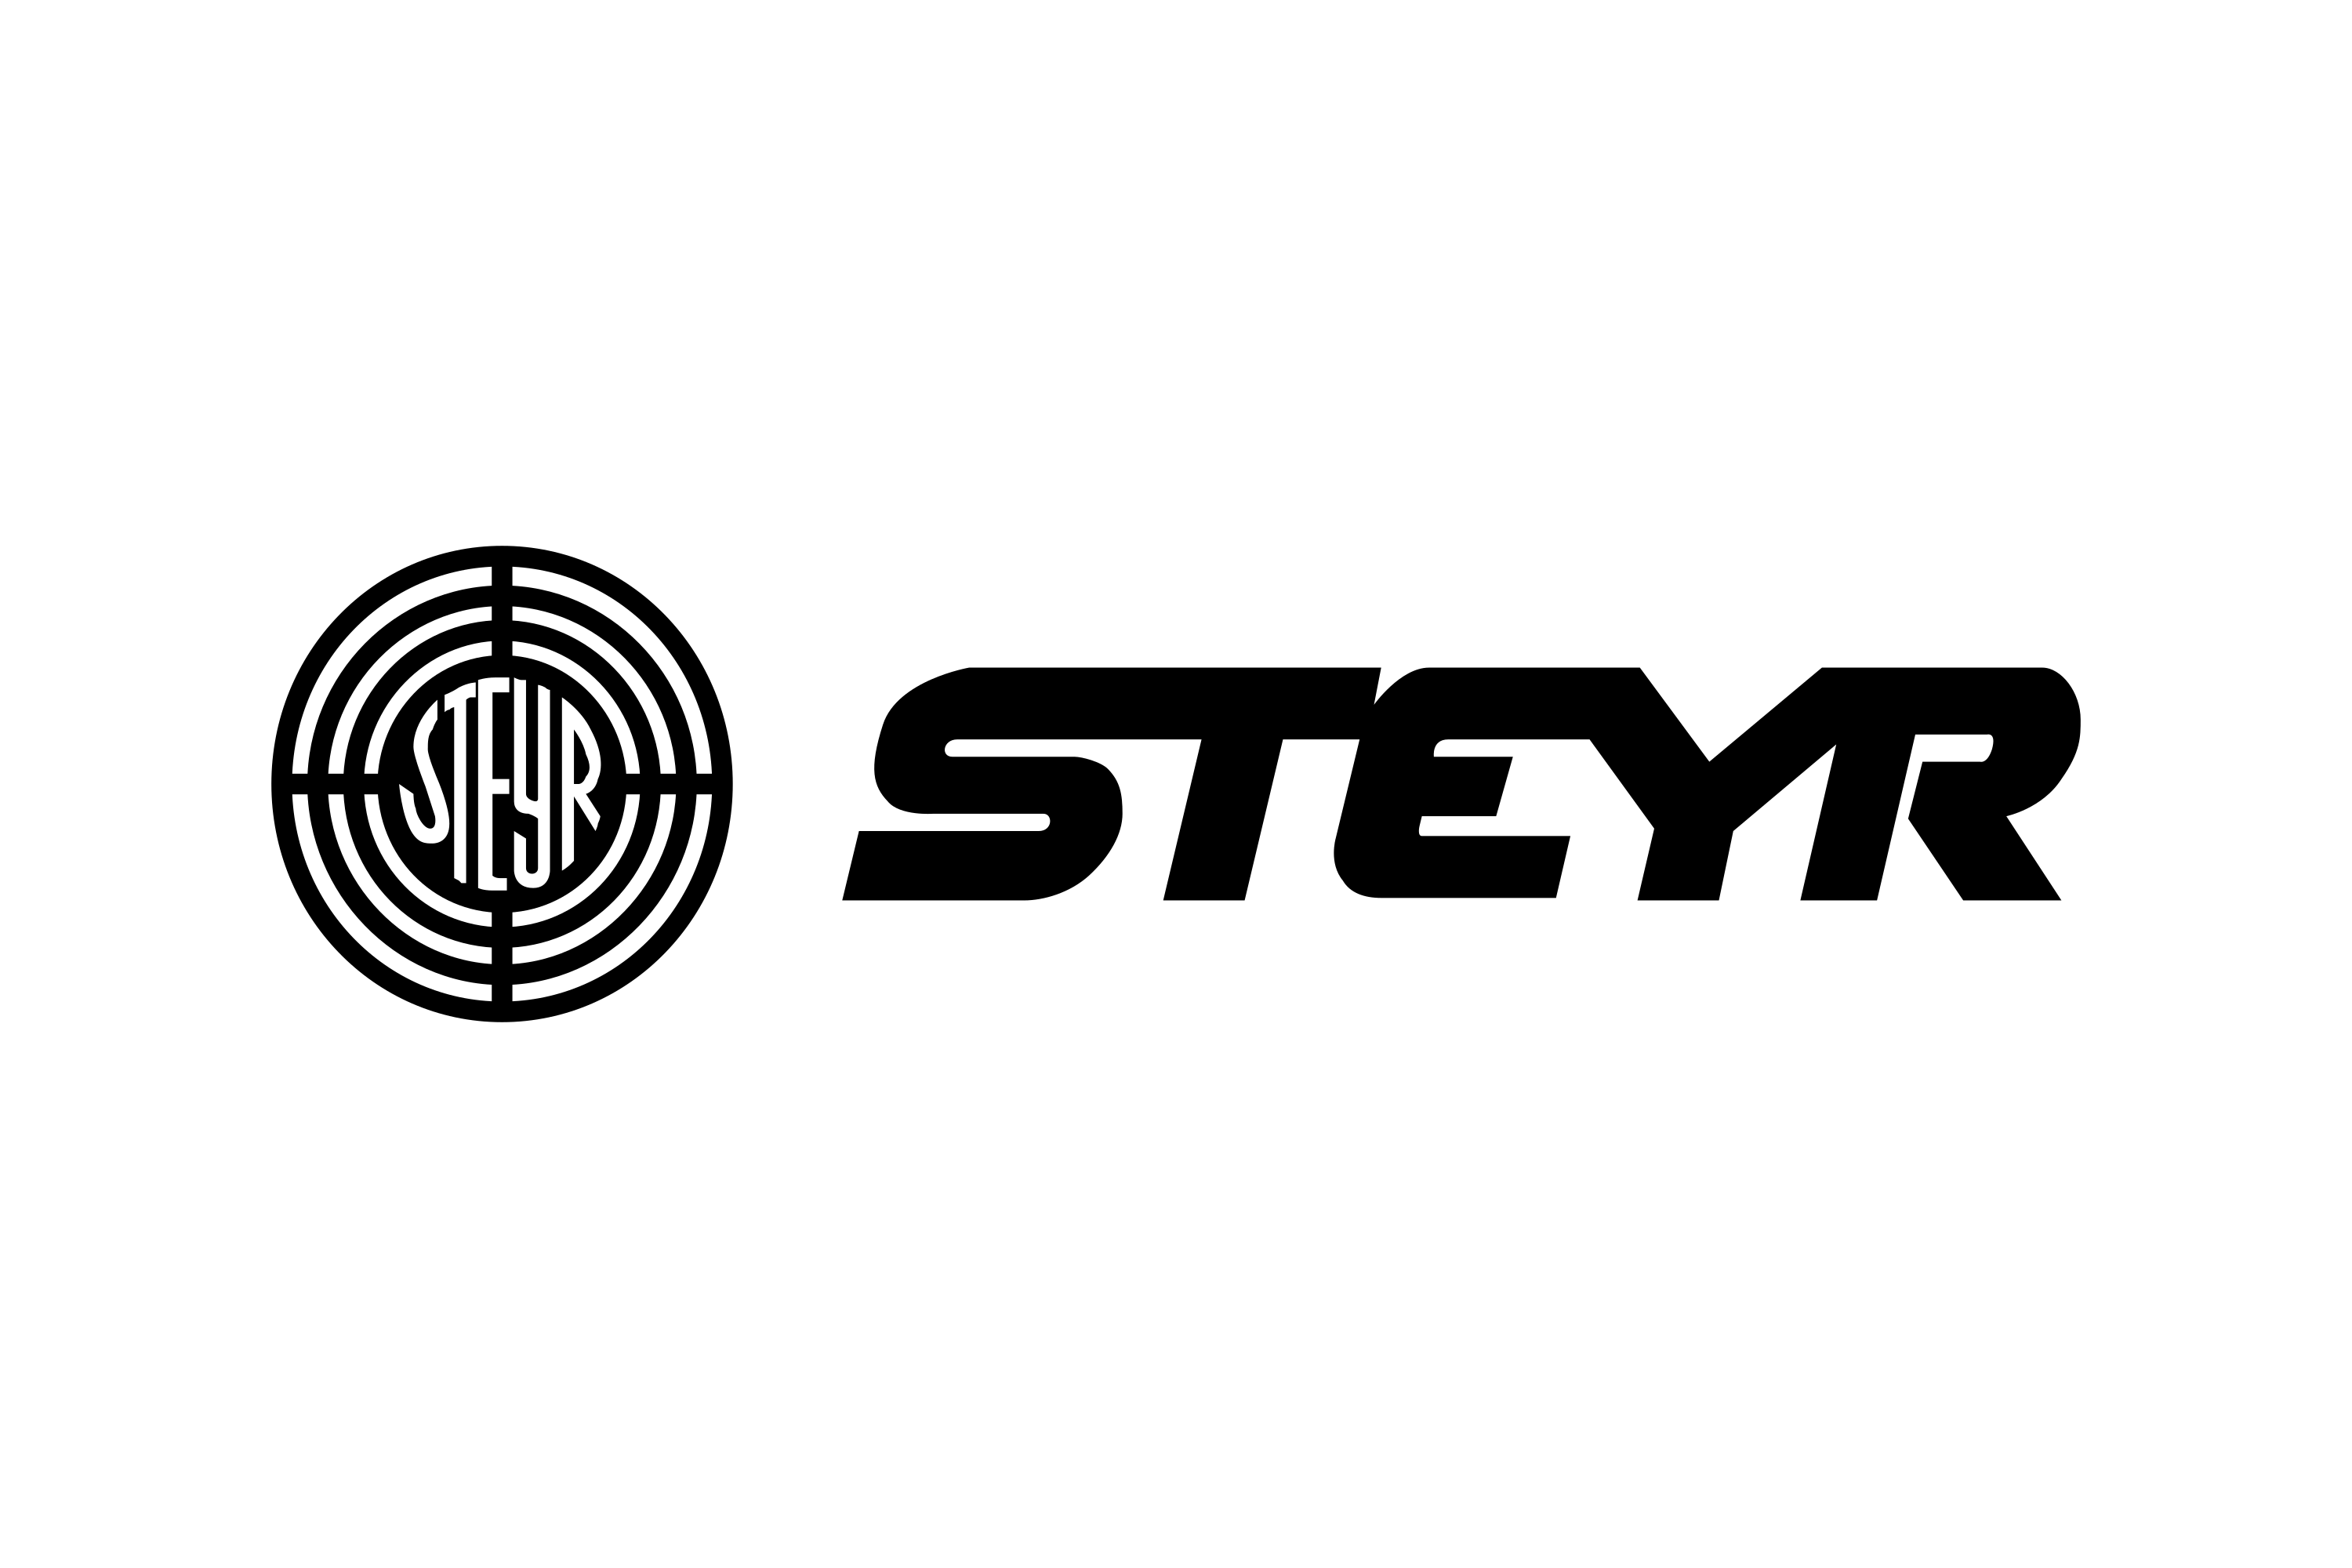 Steyr-Daimler-Puch Logo